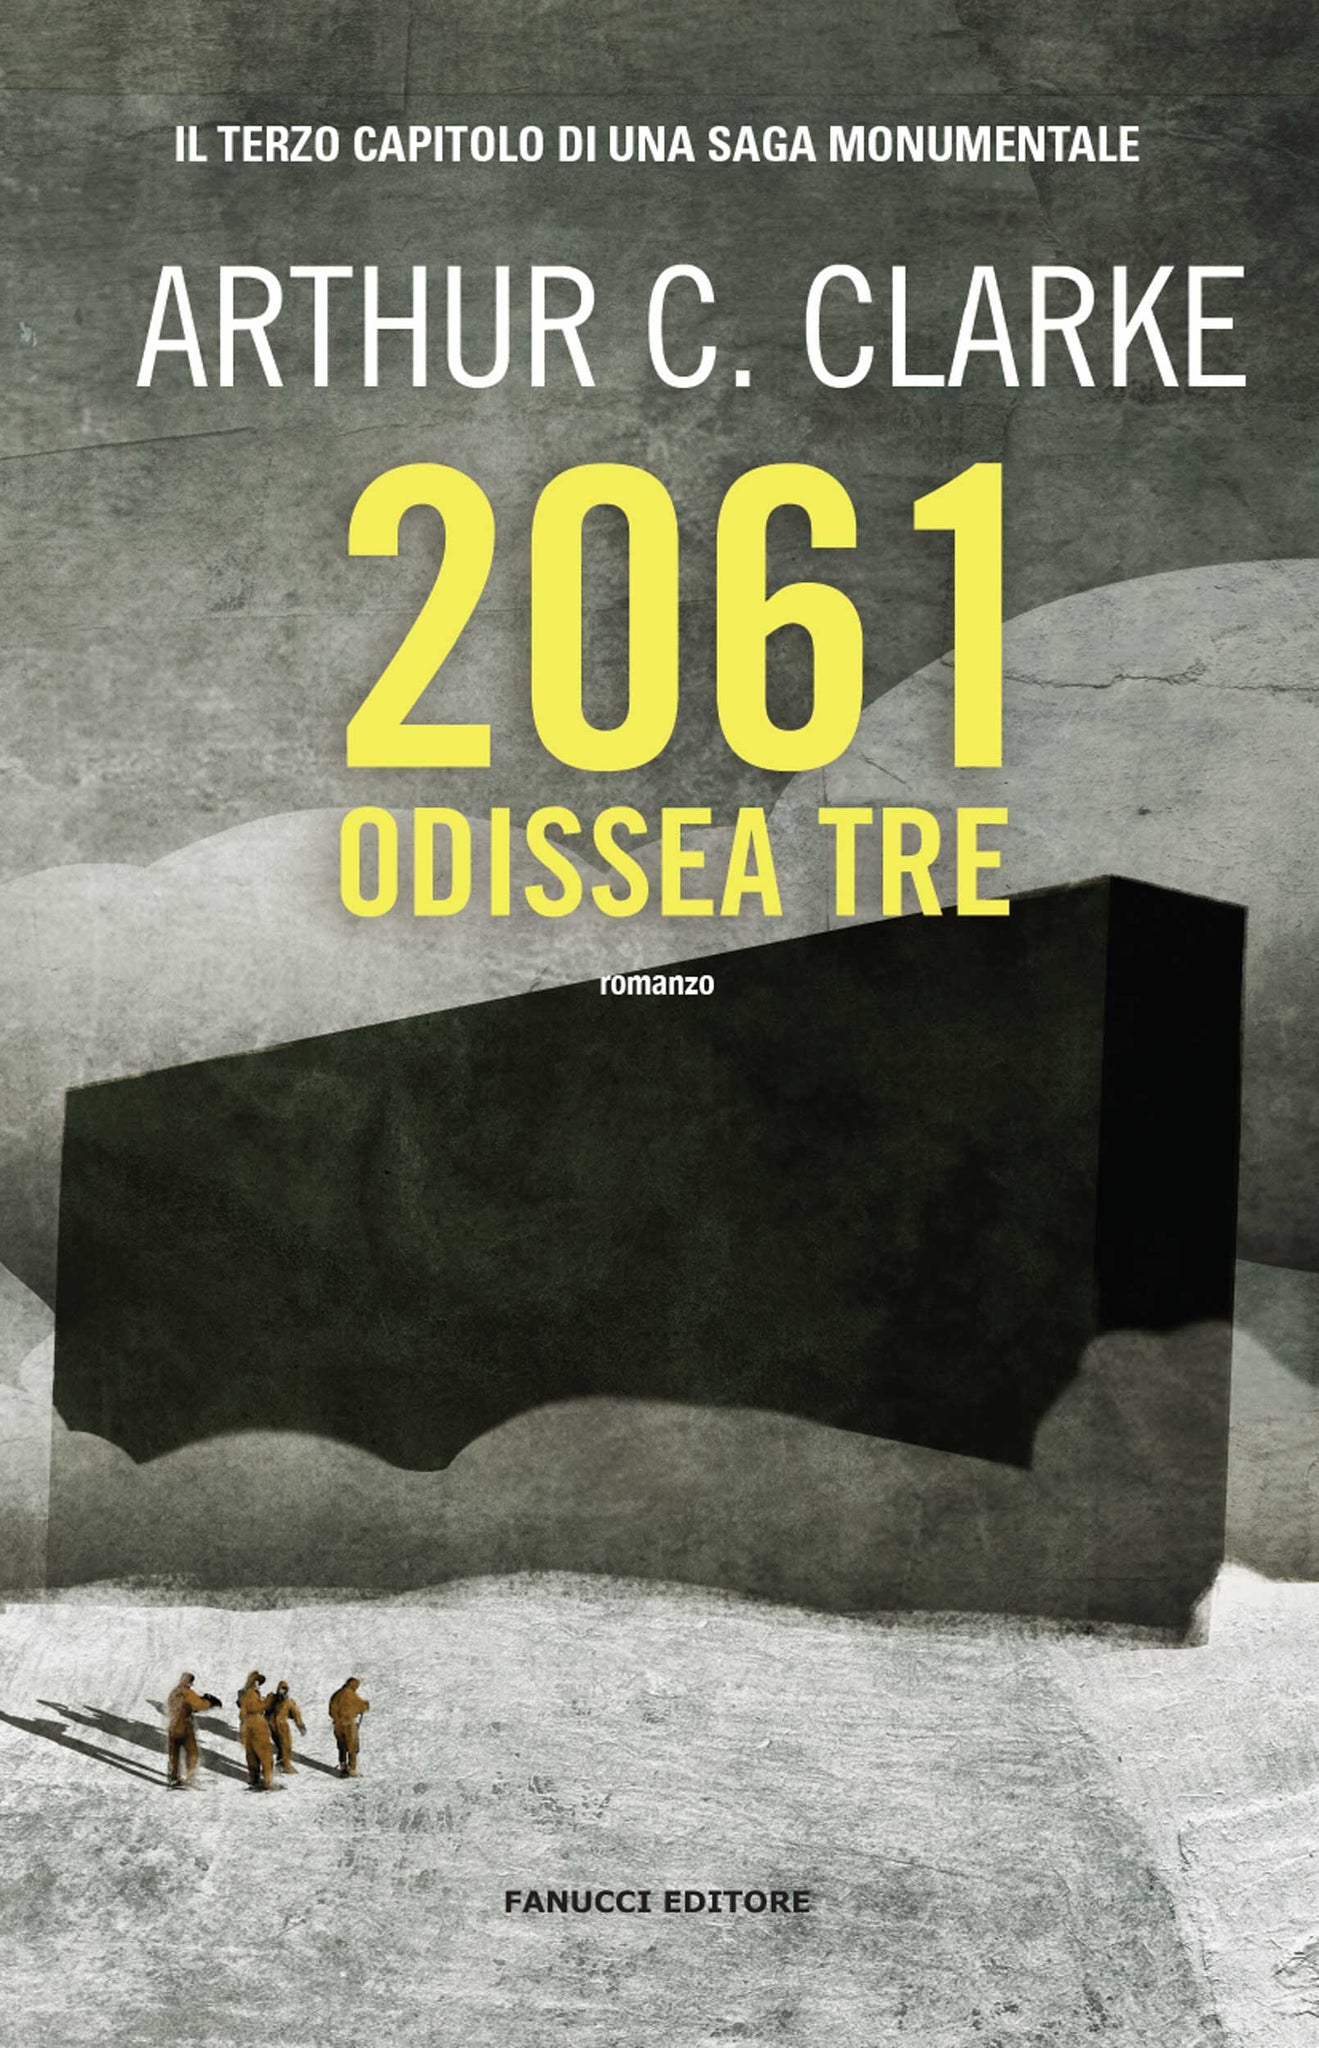 2061: Odissea tre (Odissea #3)